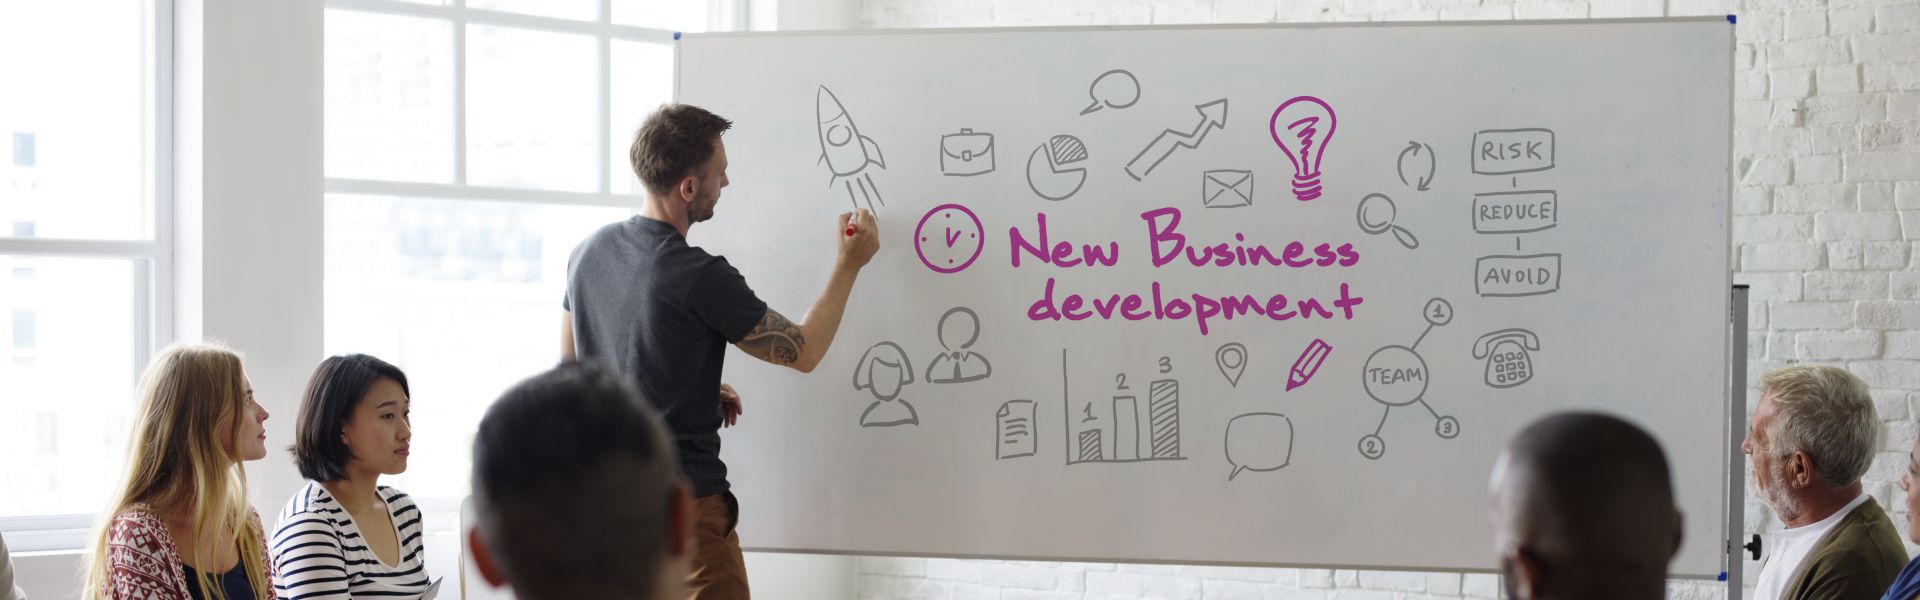 New Business development